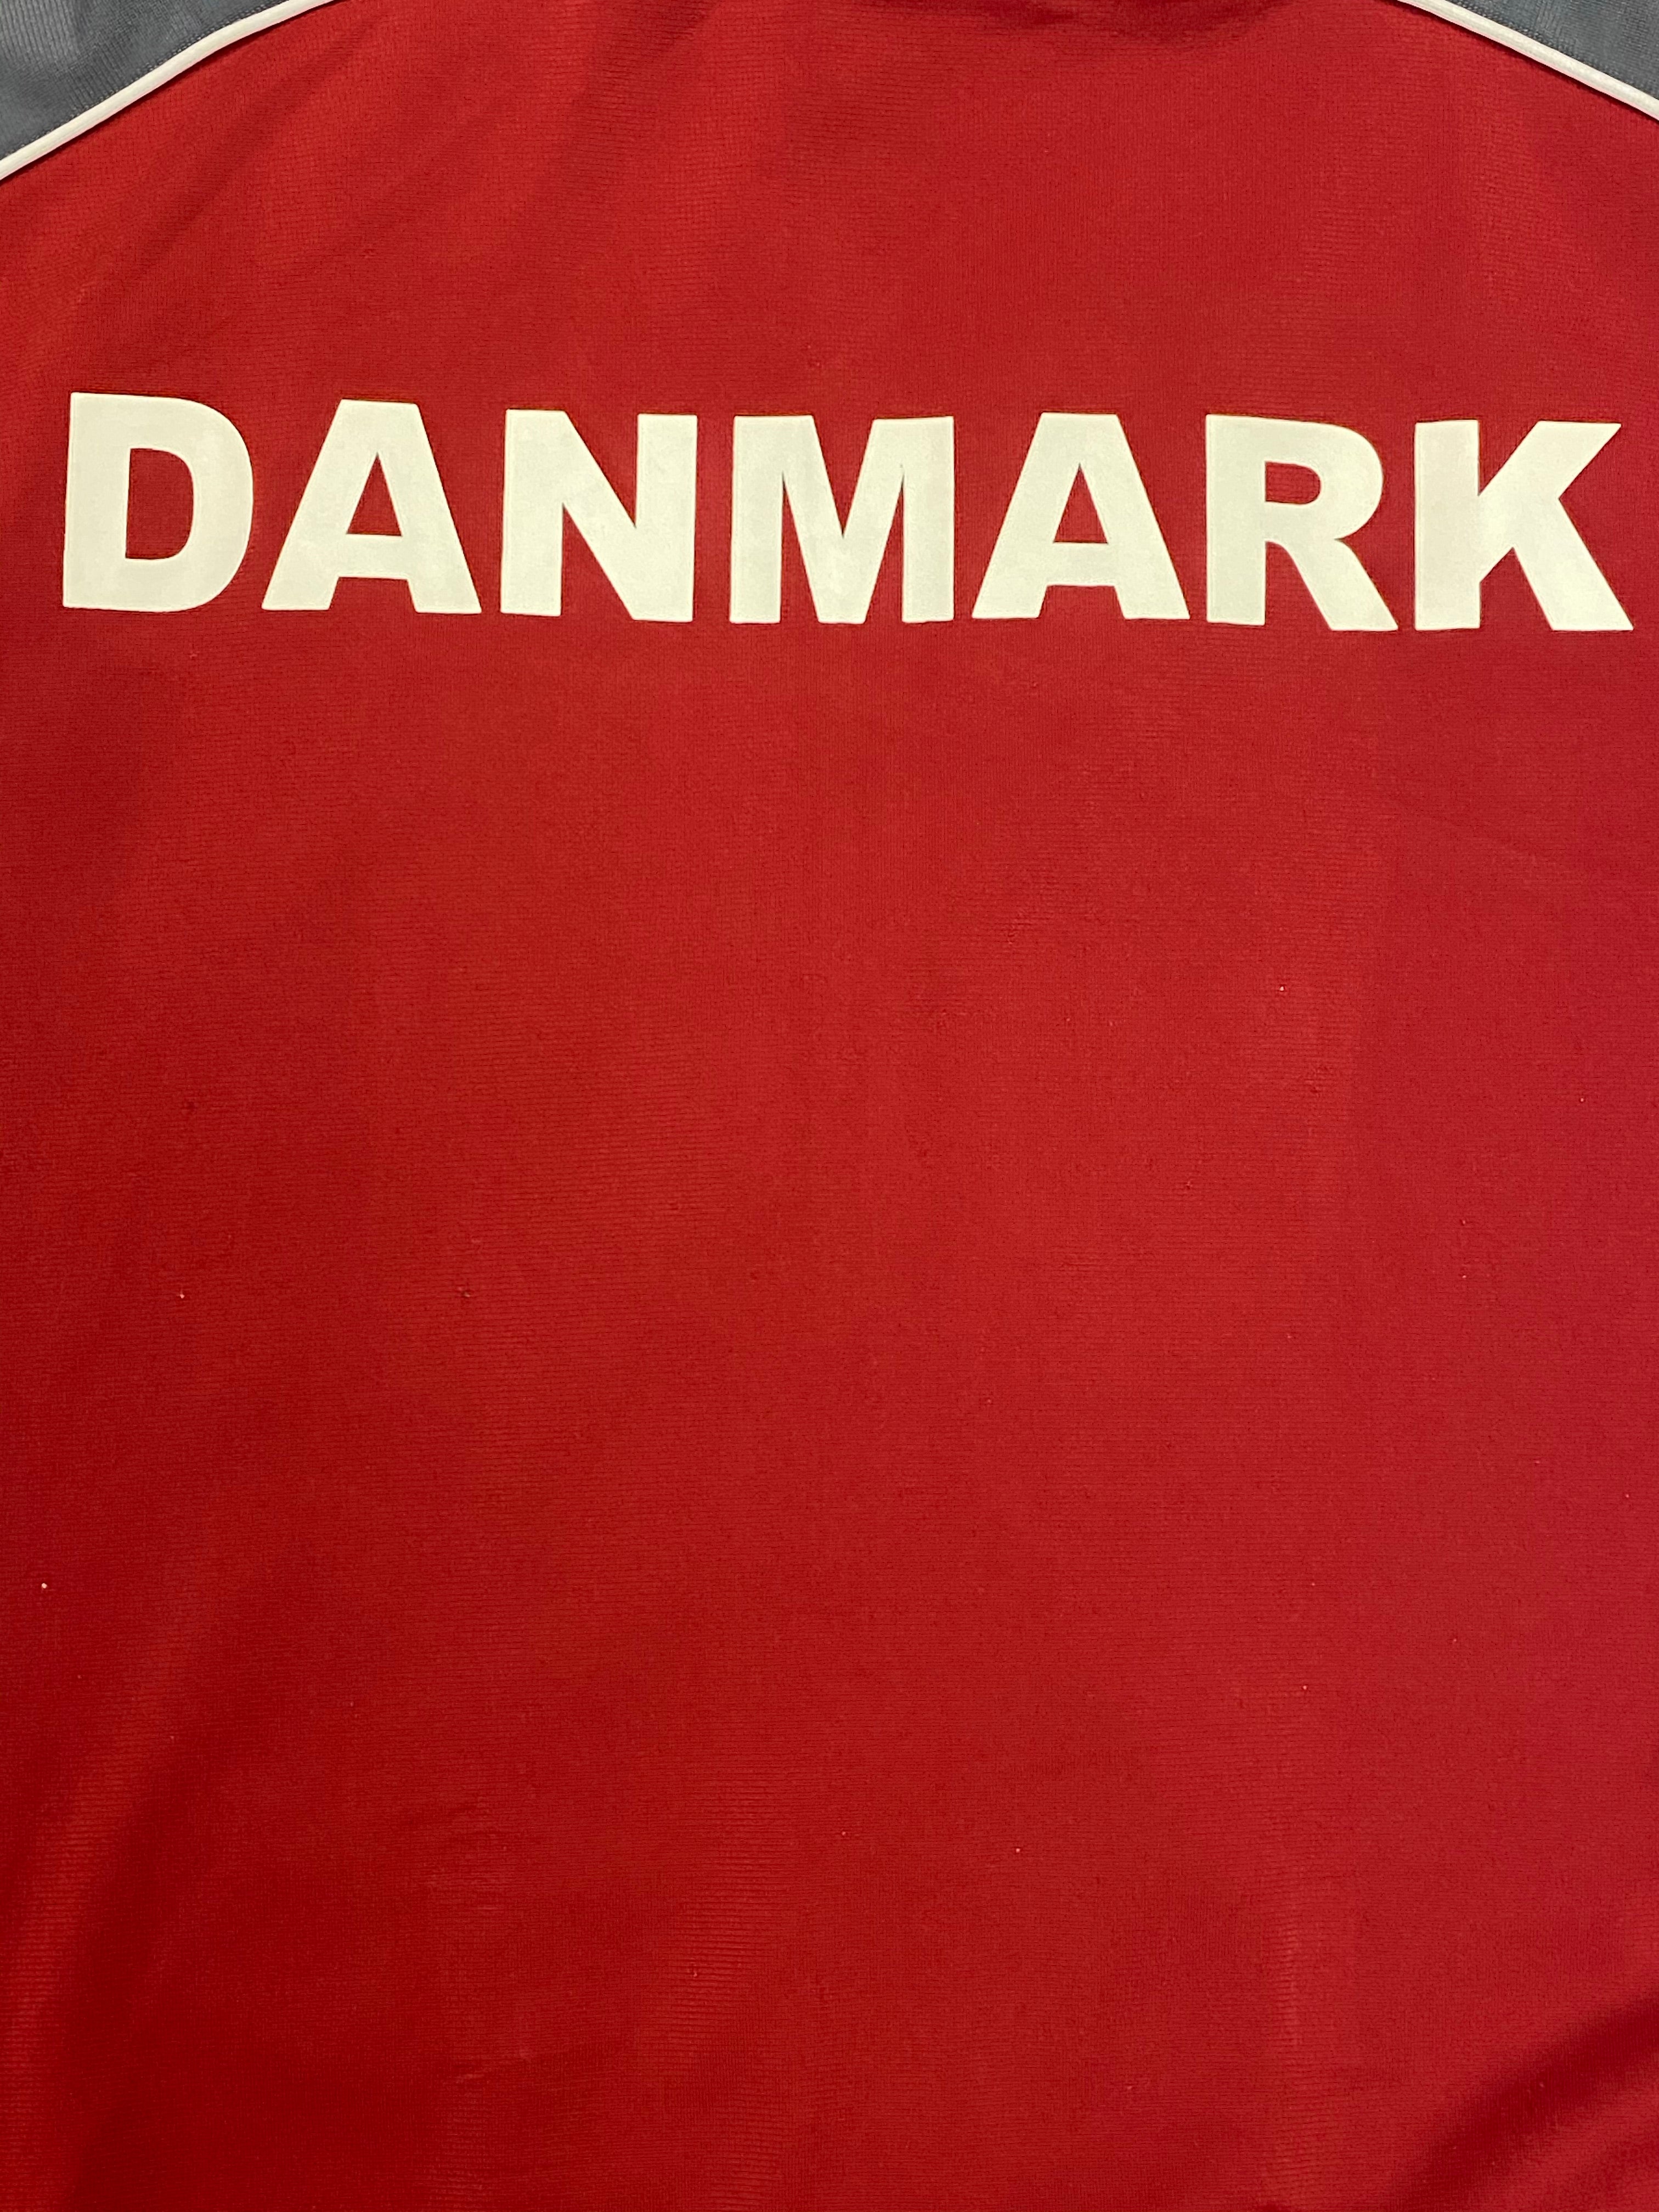 2007/08 Denmark Training Jacket (L) 7/10